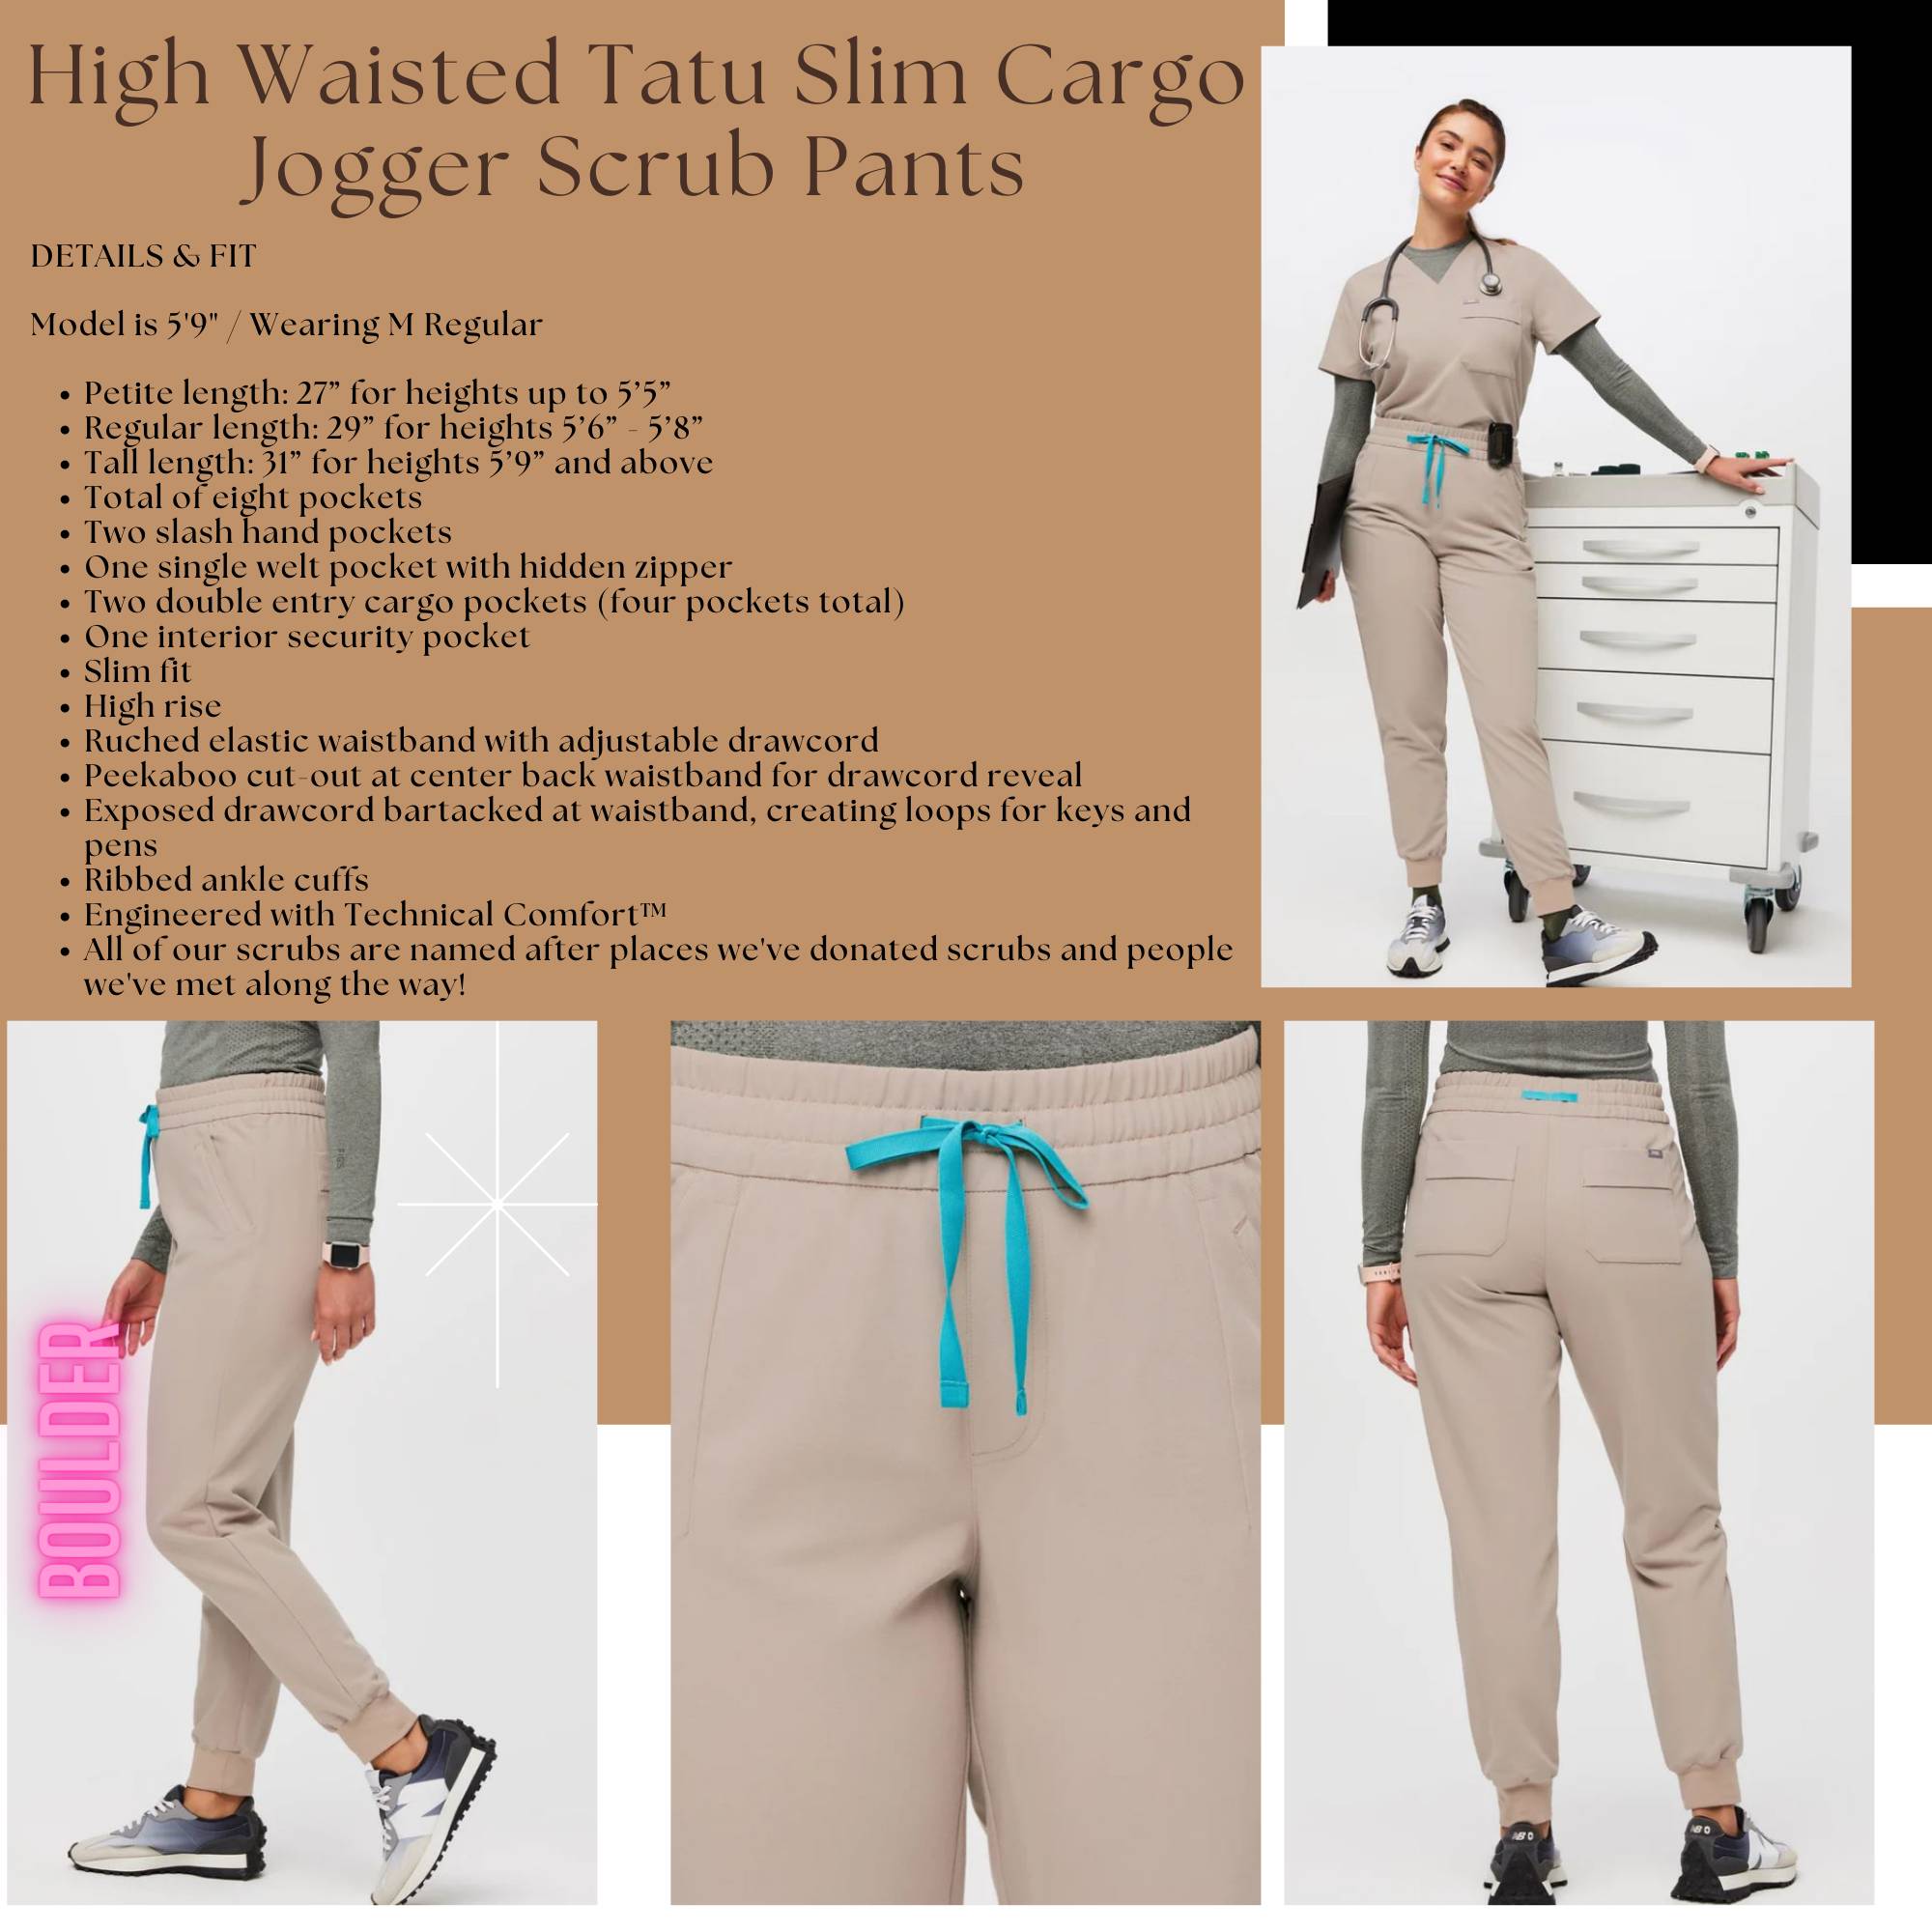 High Waisted Tatu Slim Cargo Jogger Scrub Pants - Petite - Boulder